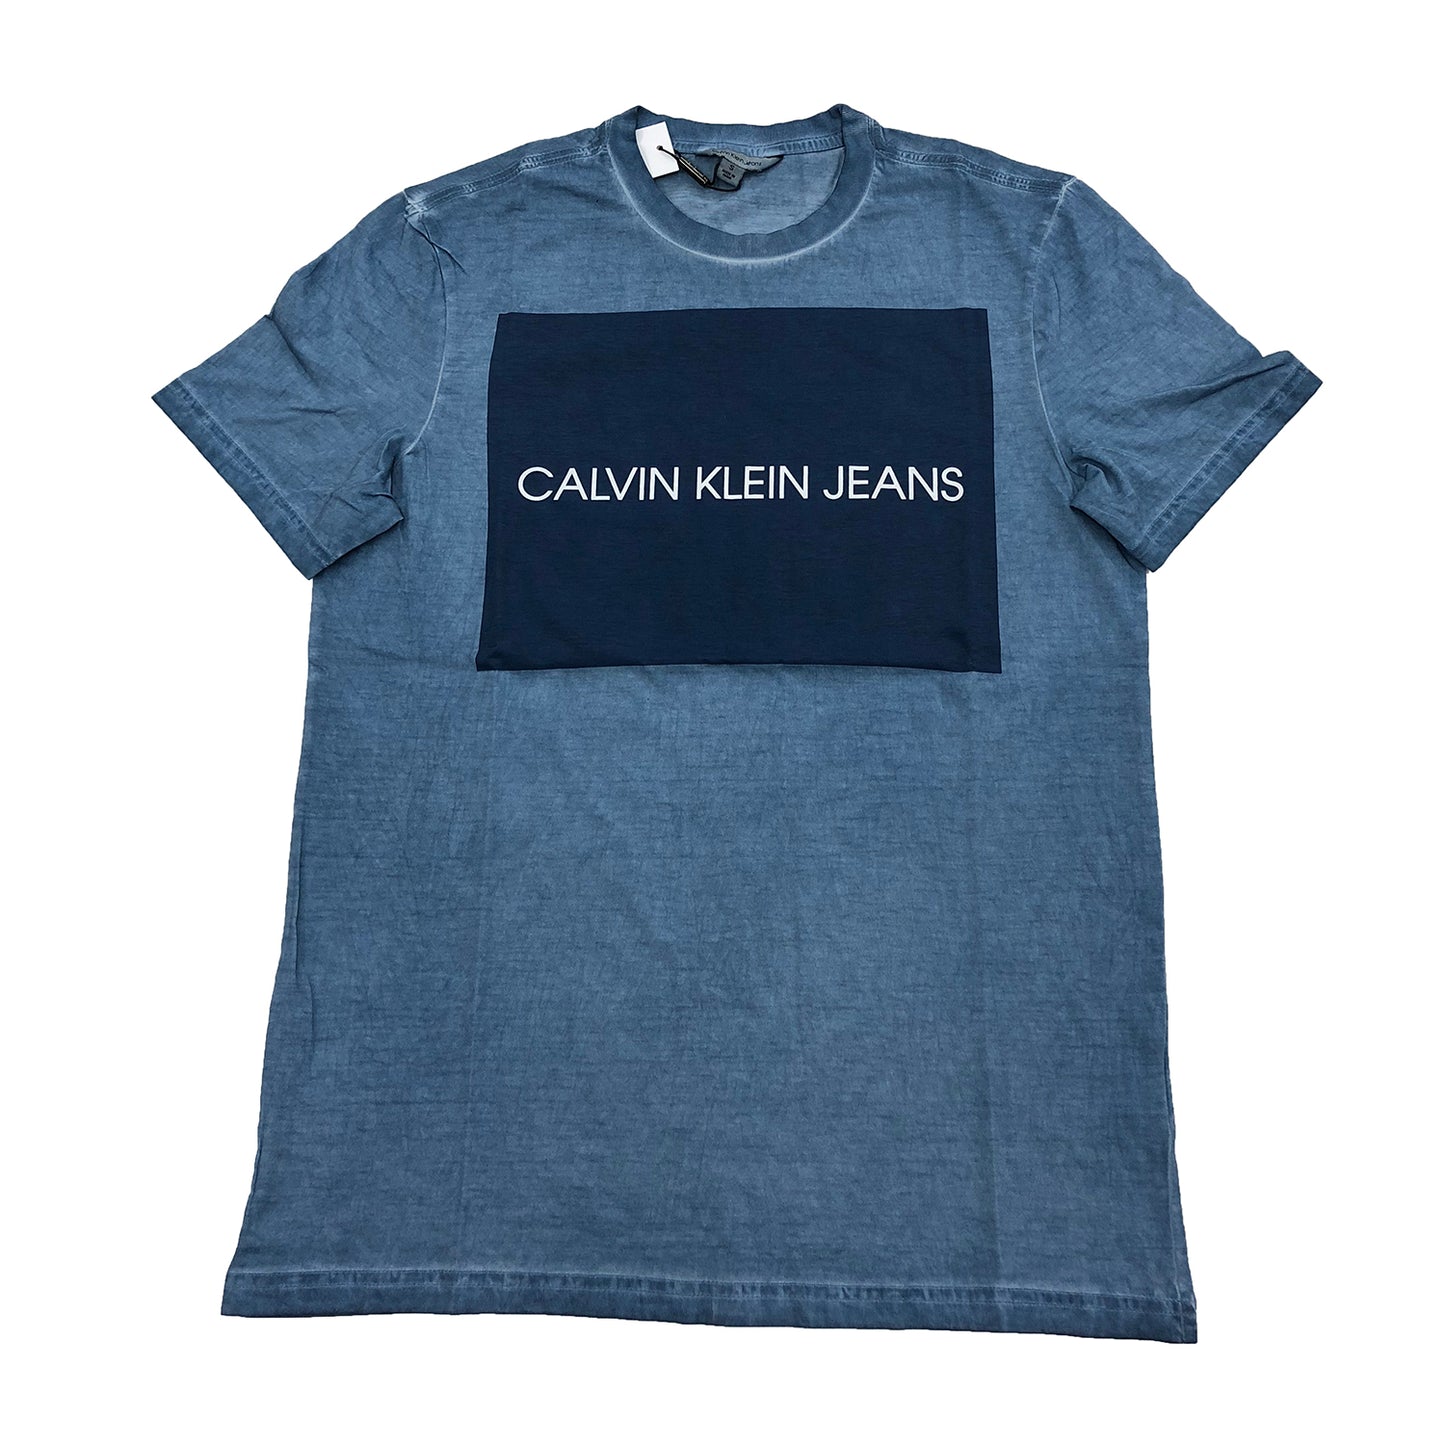 Calvin Klein Jeans Men's Short Sleeve T-Shirt